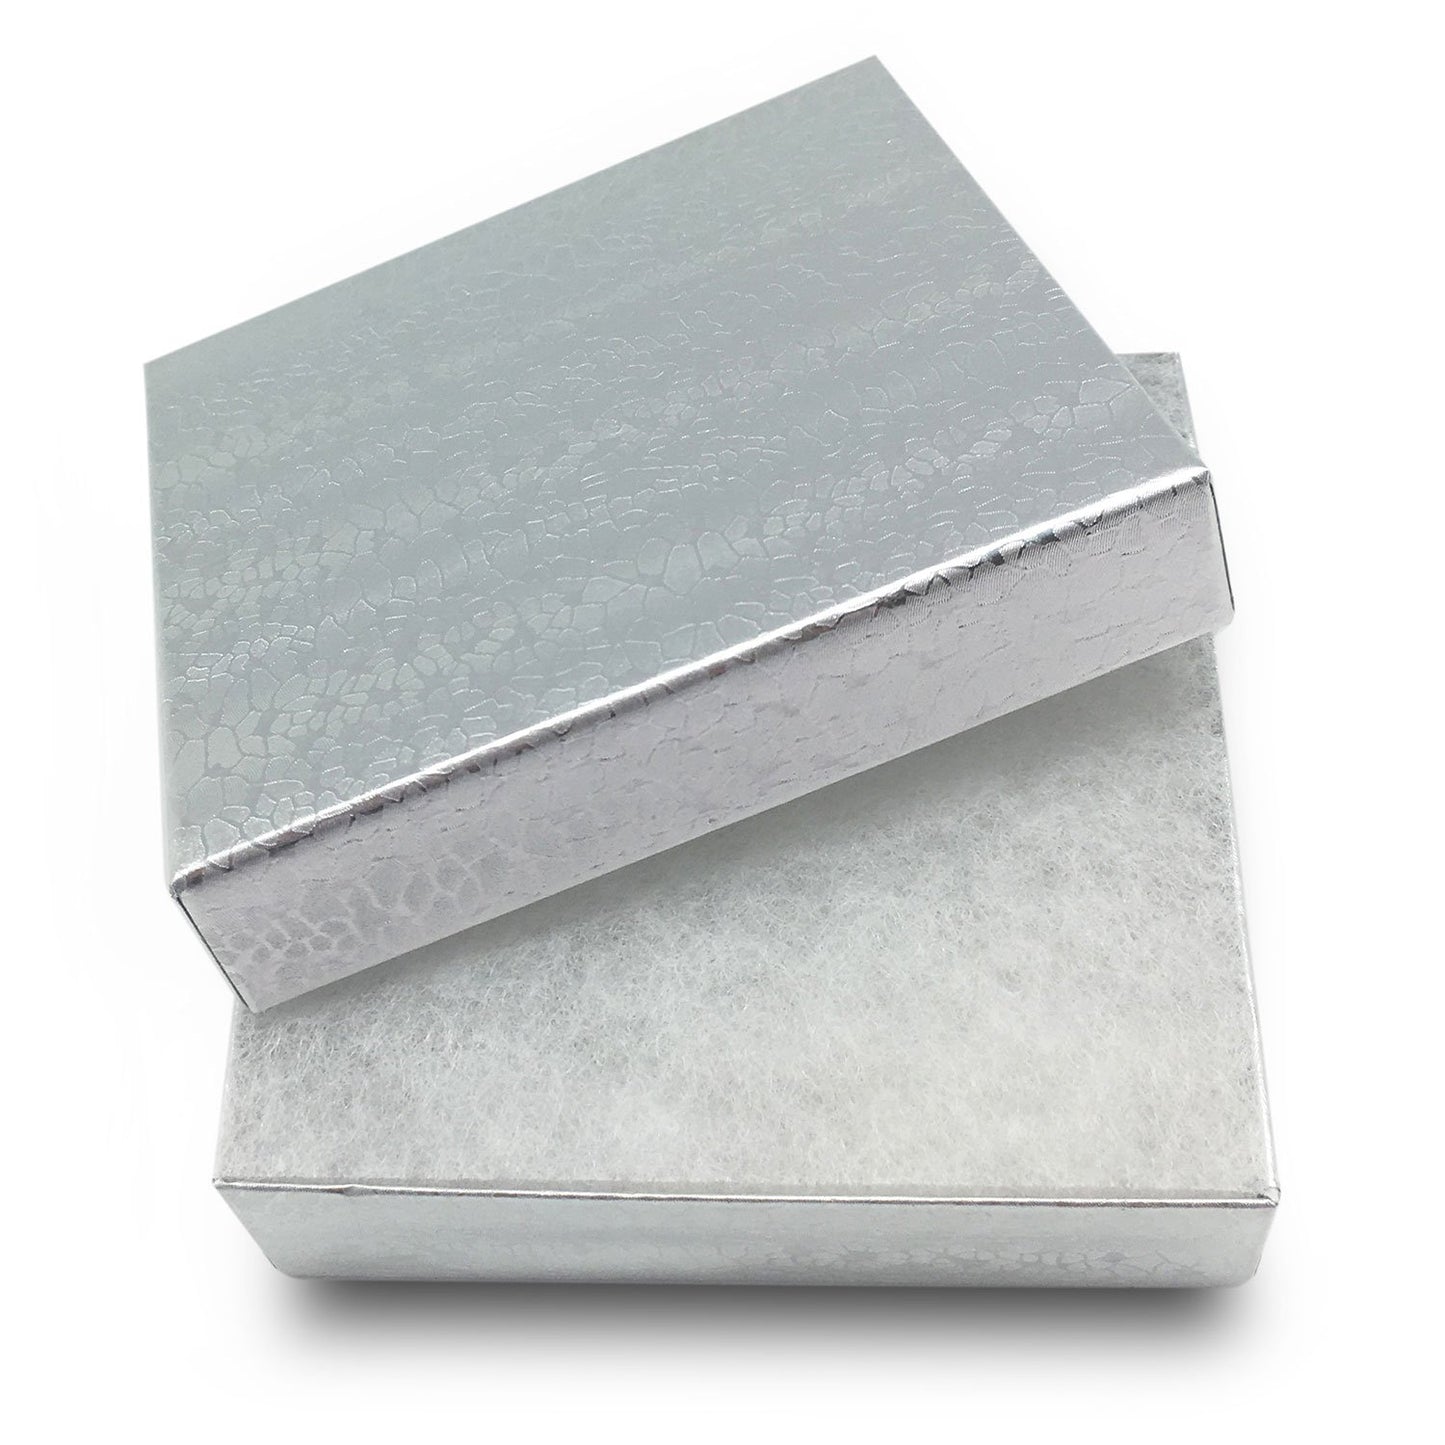 3 1/2" x 3 1/2" X 1" Silver Cotton Filled Paper Box